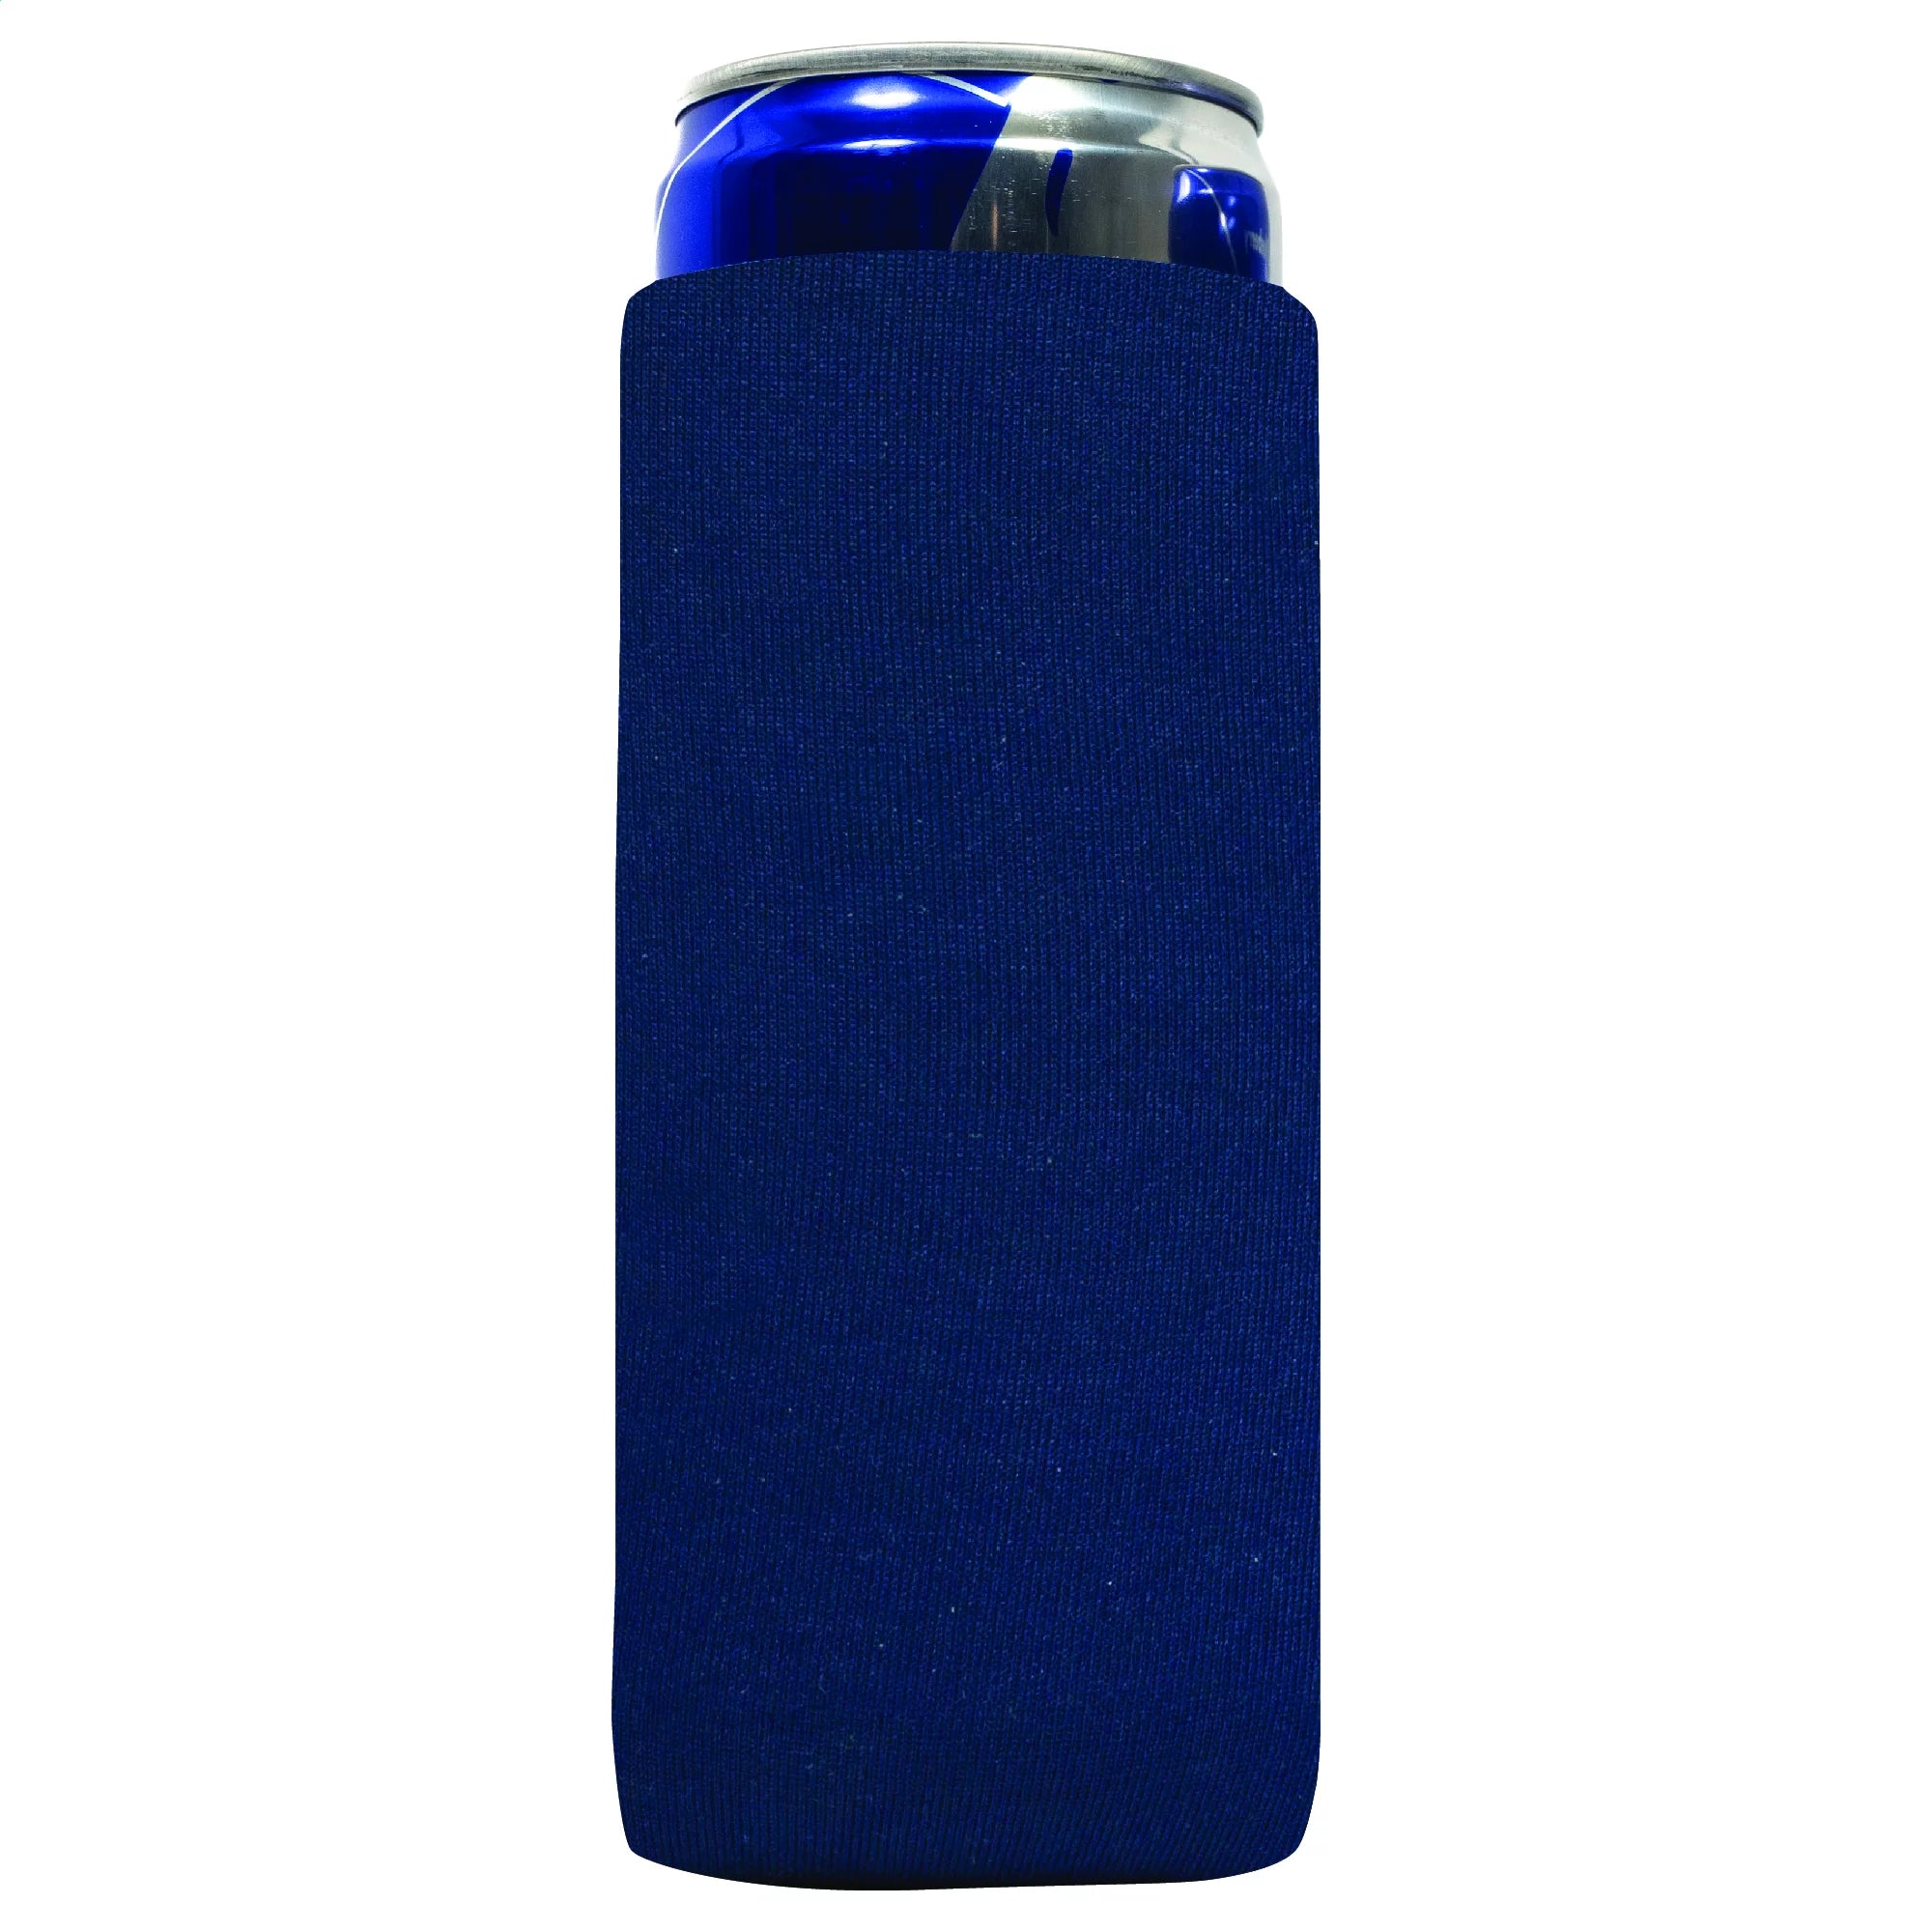 12oz Stainless Steel Bottle / Can Koozie - BLUE – Kollegiate Kups